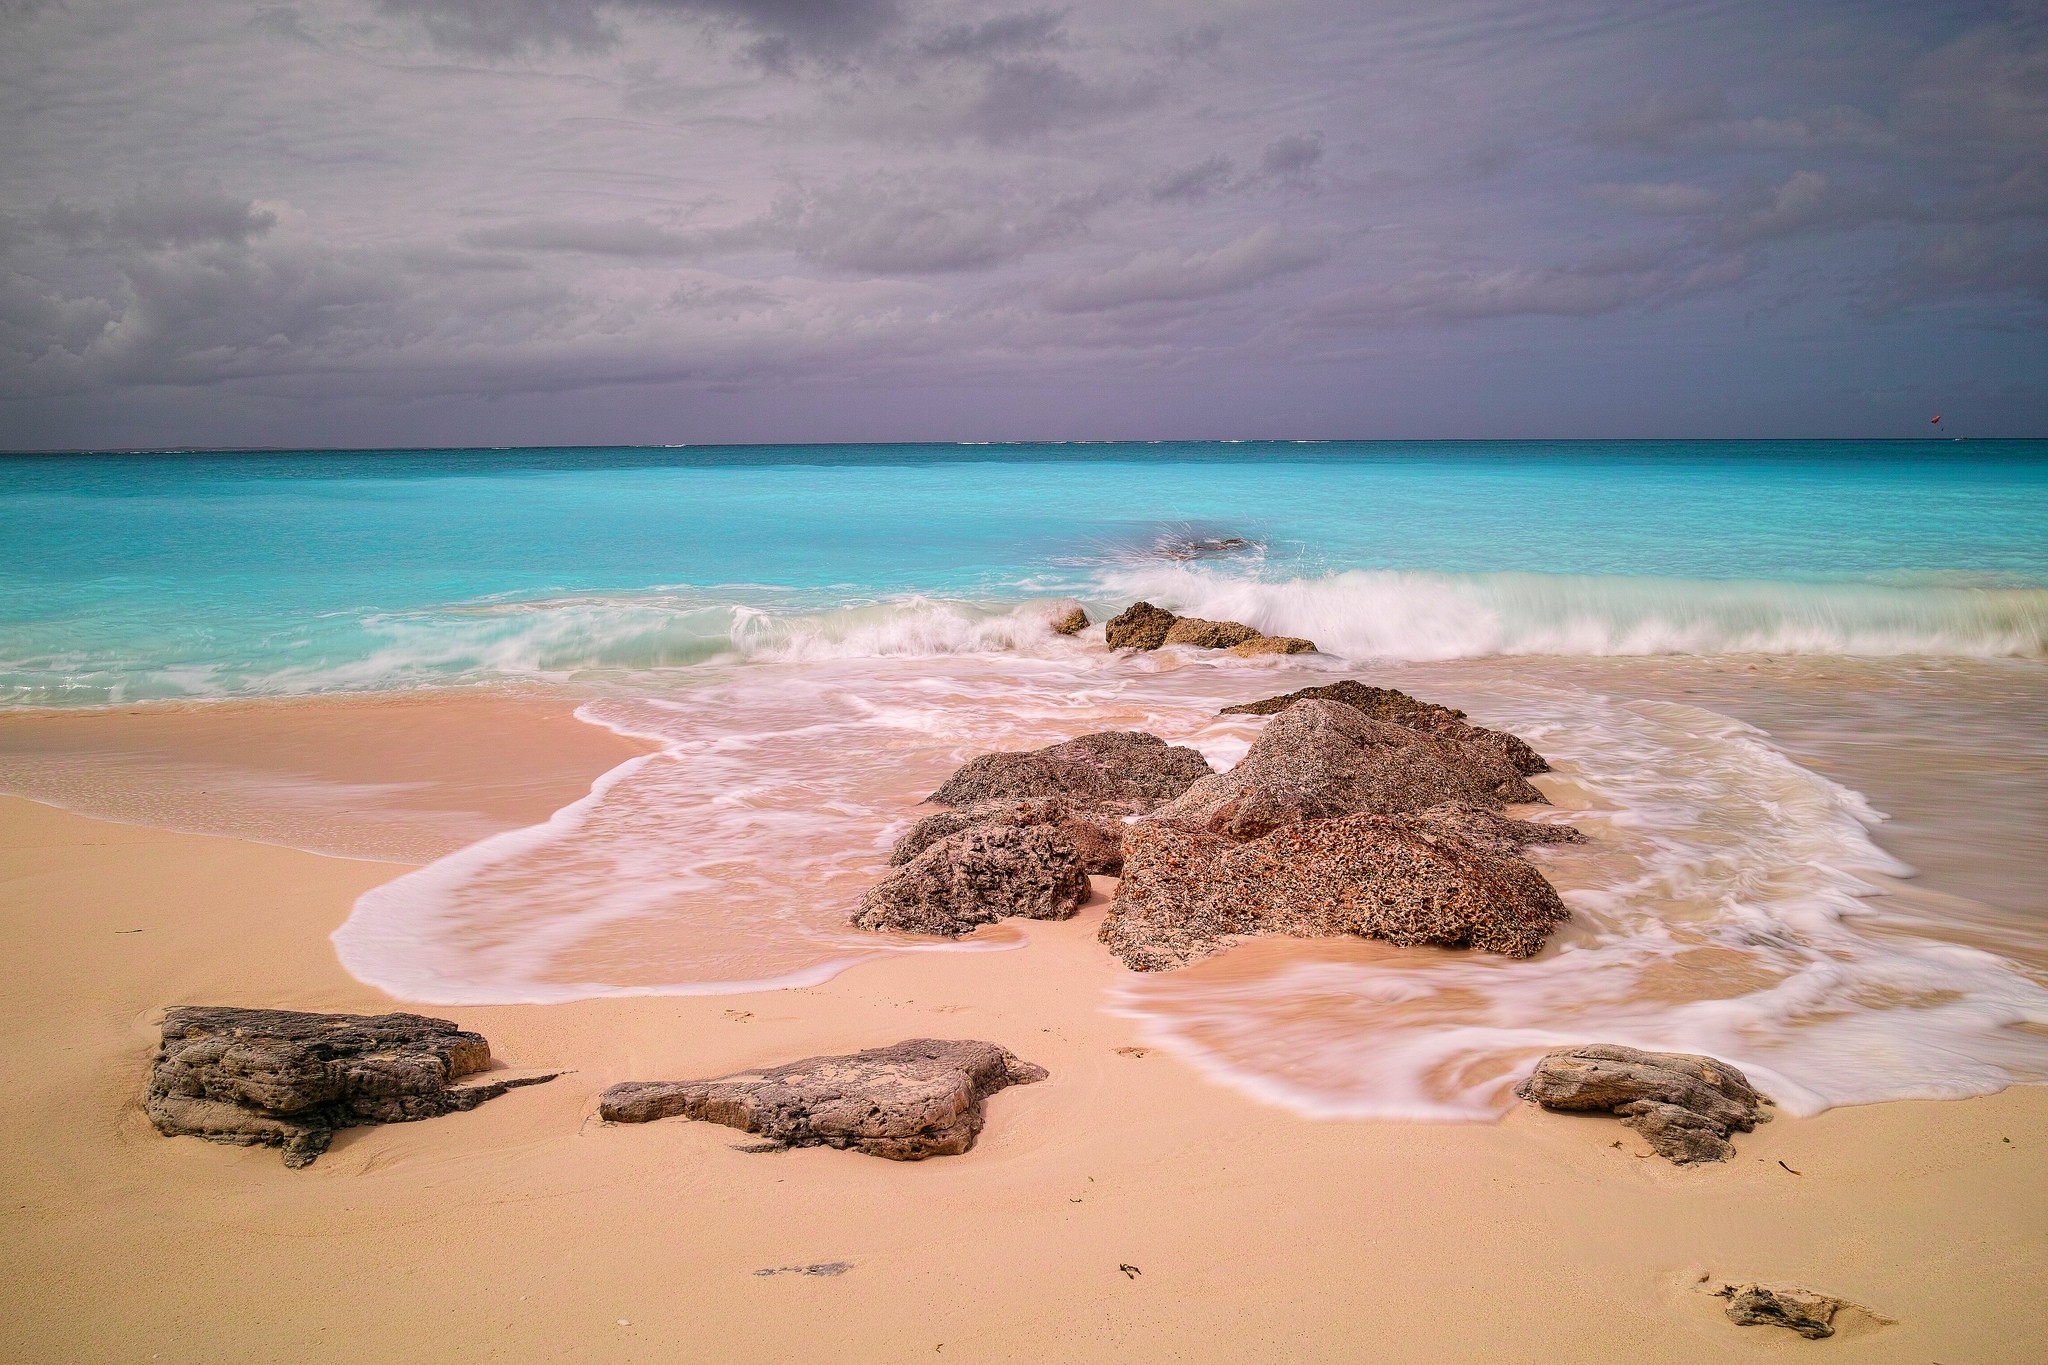 General 2048x1365 nature photography beach sea rocks sand Eden island tropical Caribbean Turks & Caicos